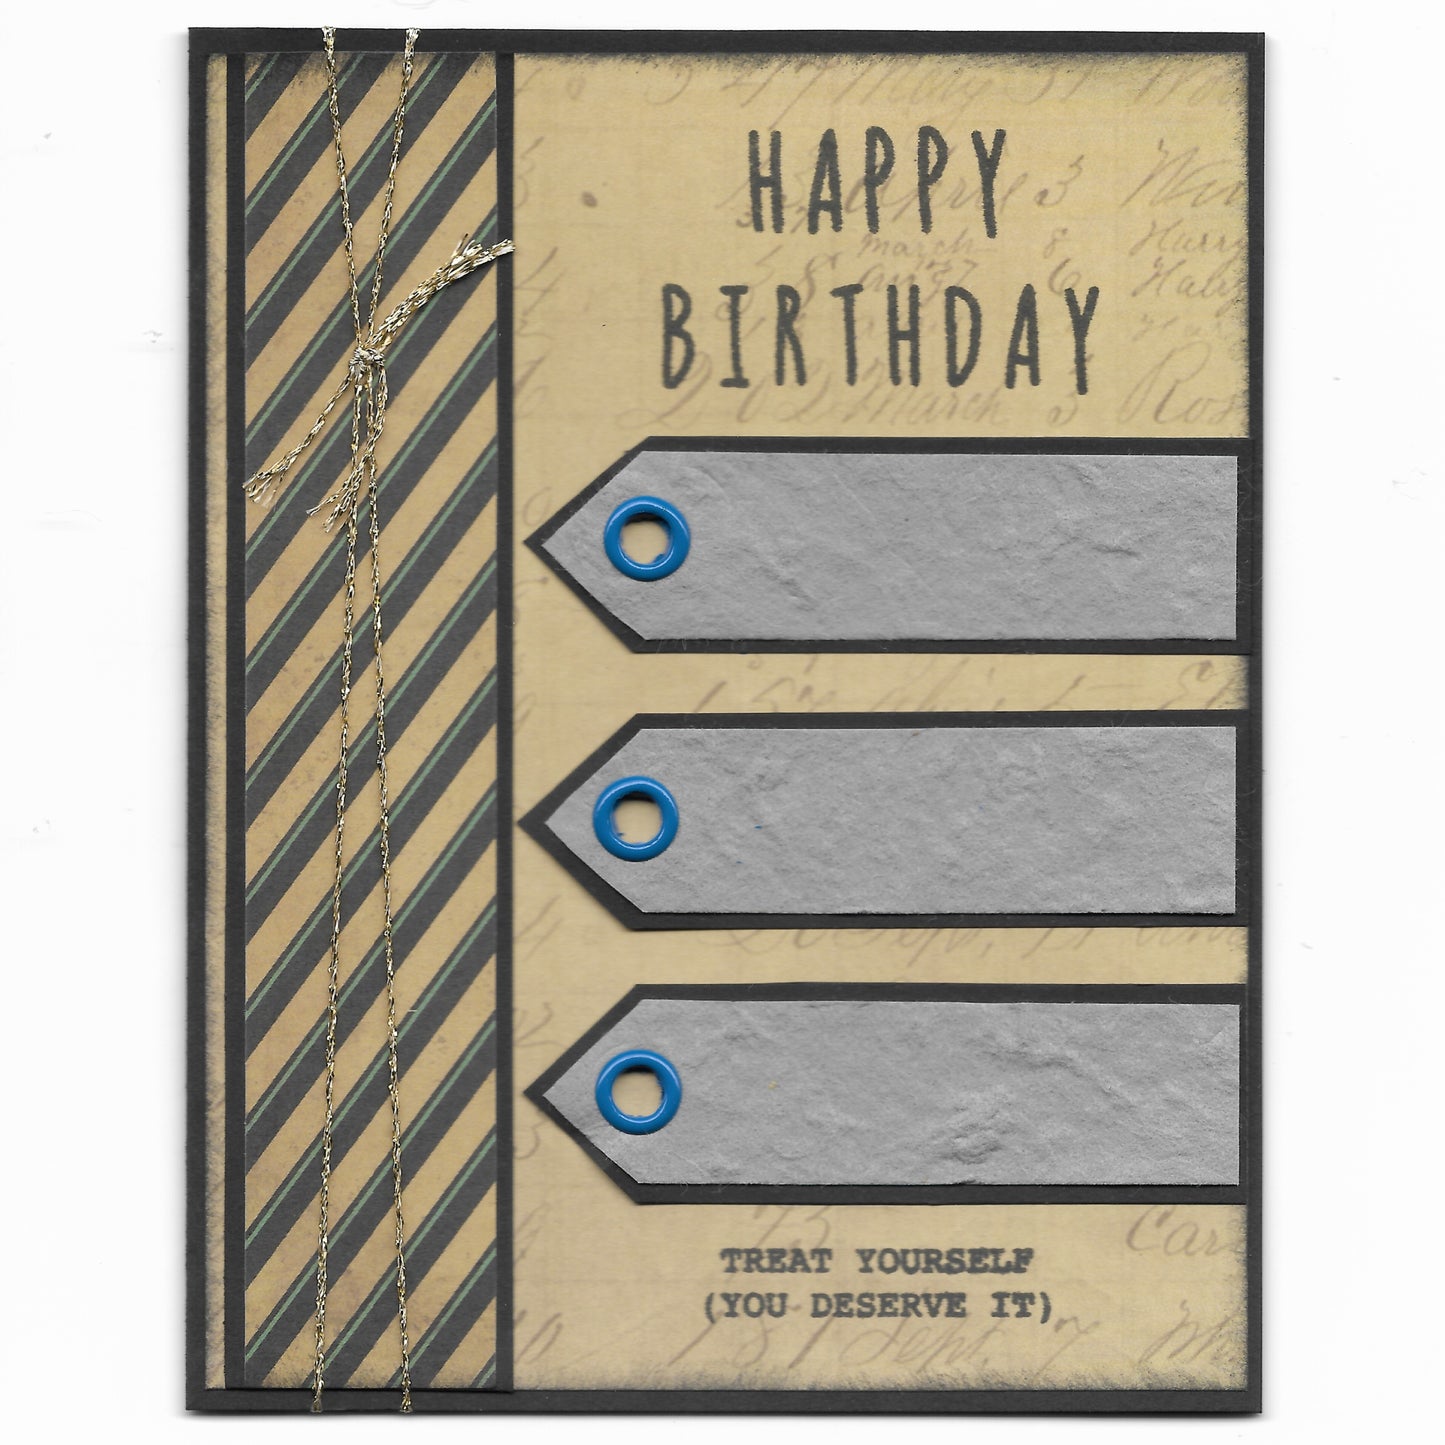 Greeting Cards, Birthday